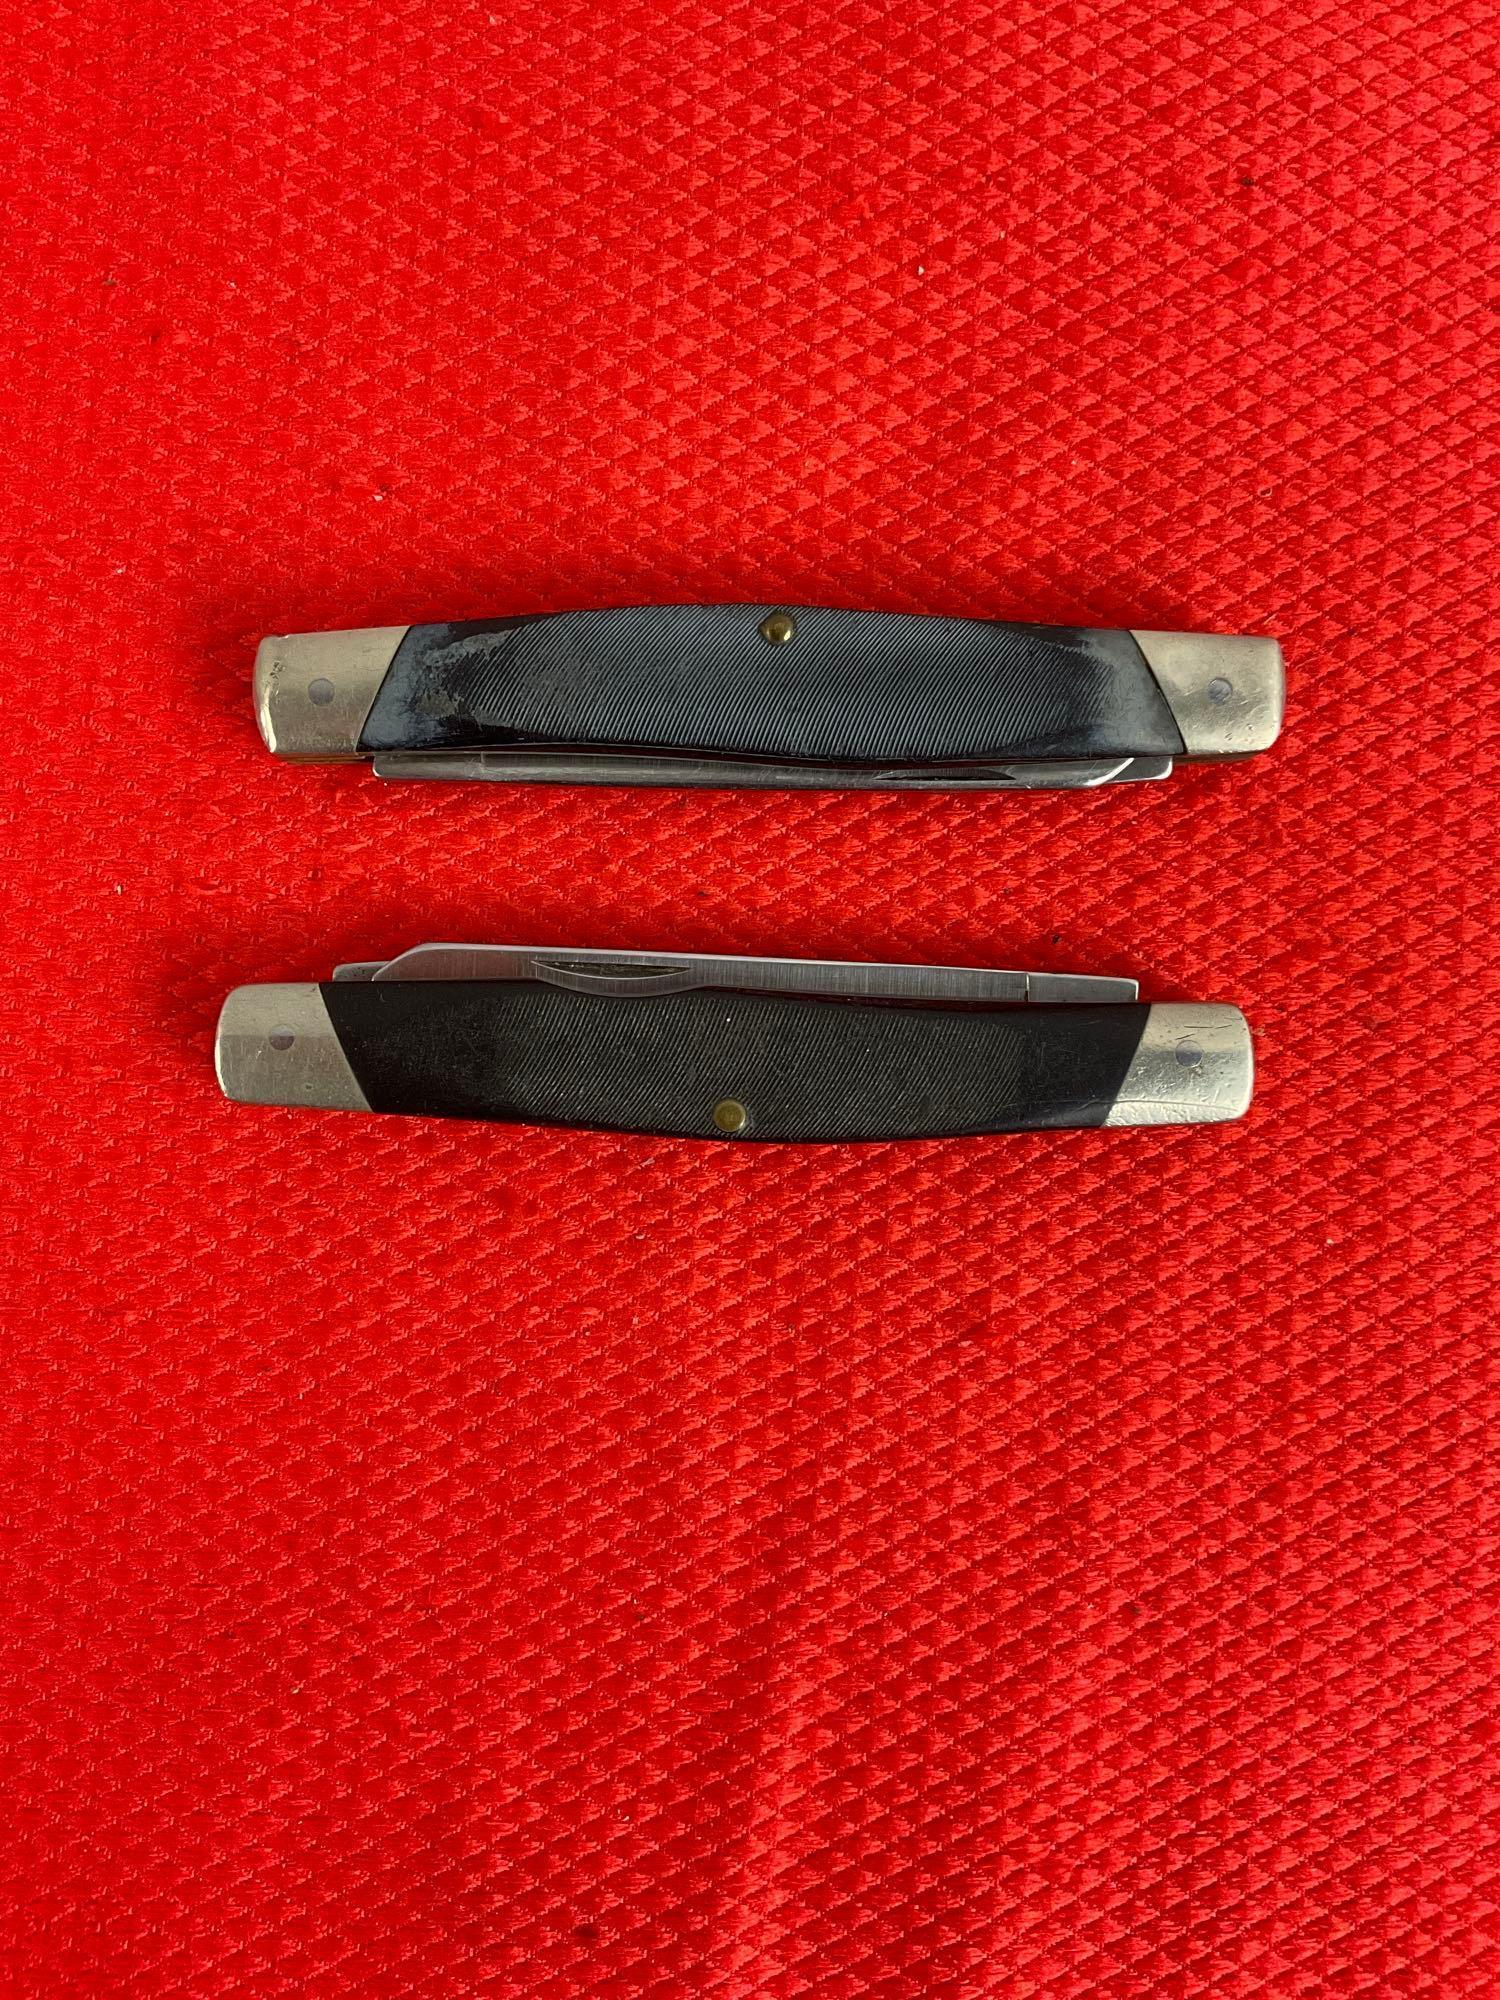 2 pcs Vintage Buck 2.75" Steel Folding 2-Blade Muskrat Pocket Knives Model 313 w/ Delrine Handles.